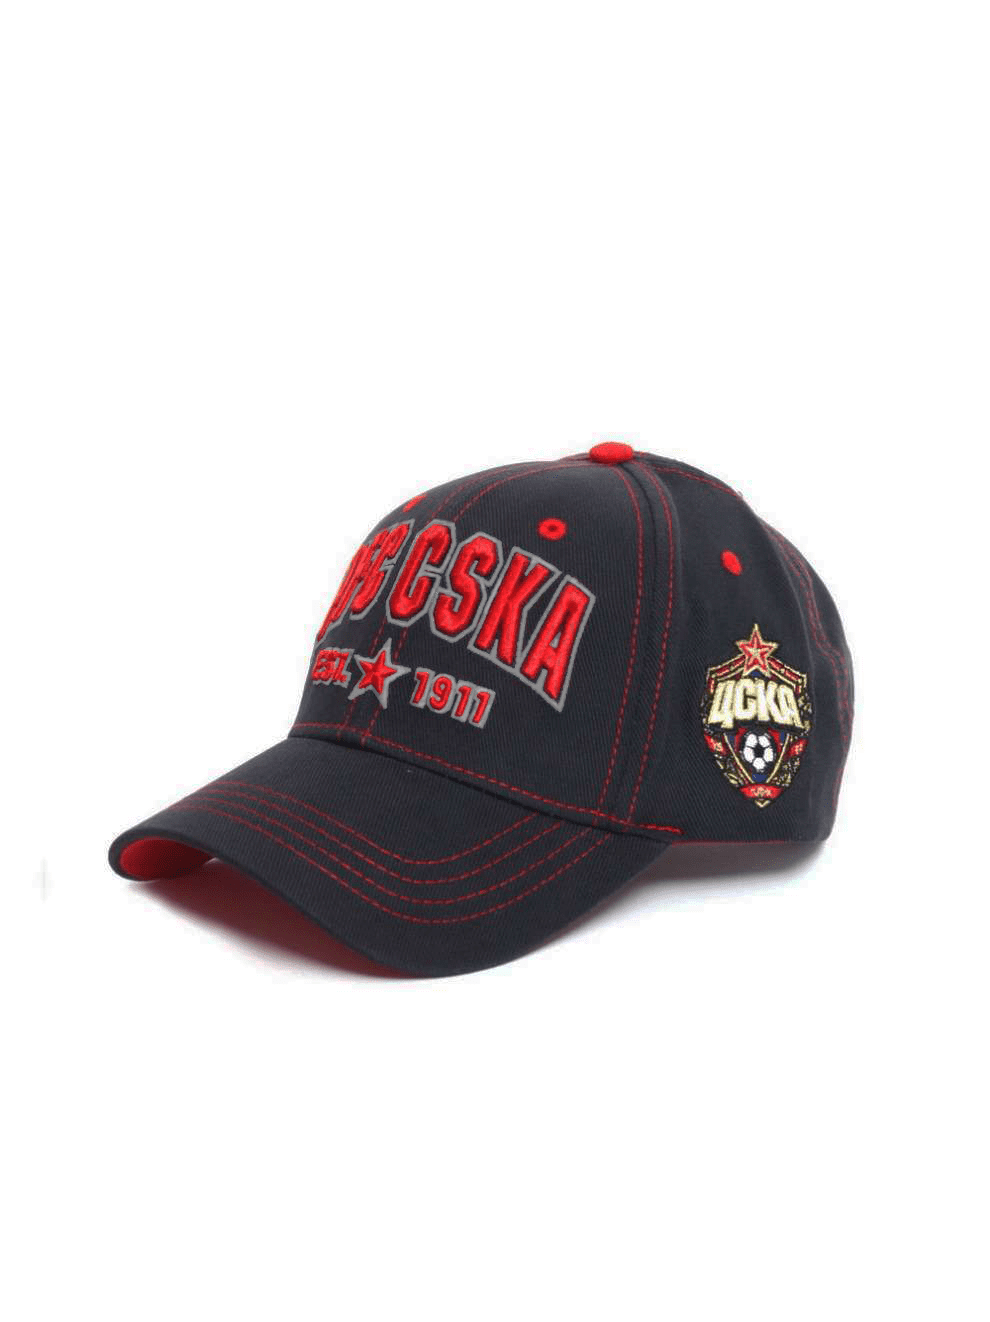  PFC CSKA (50348),  